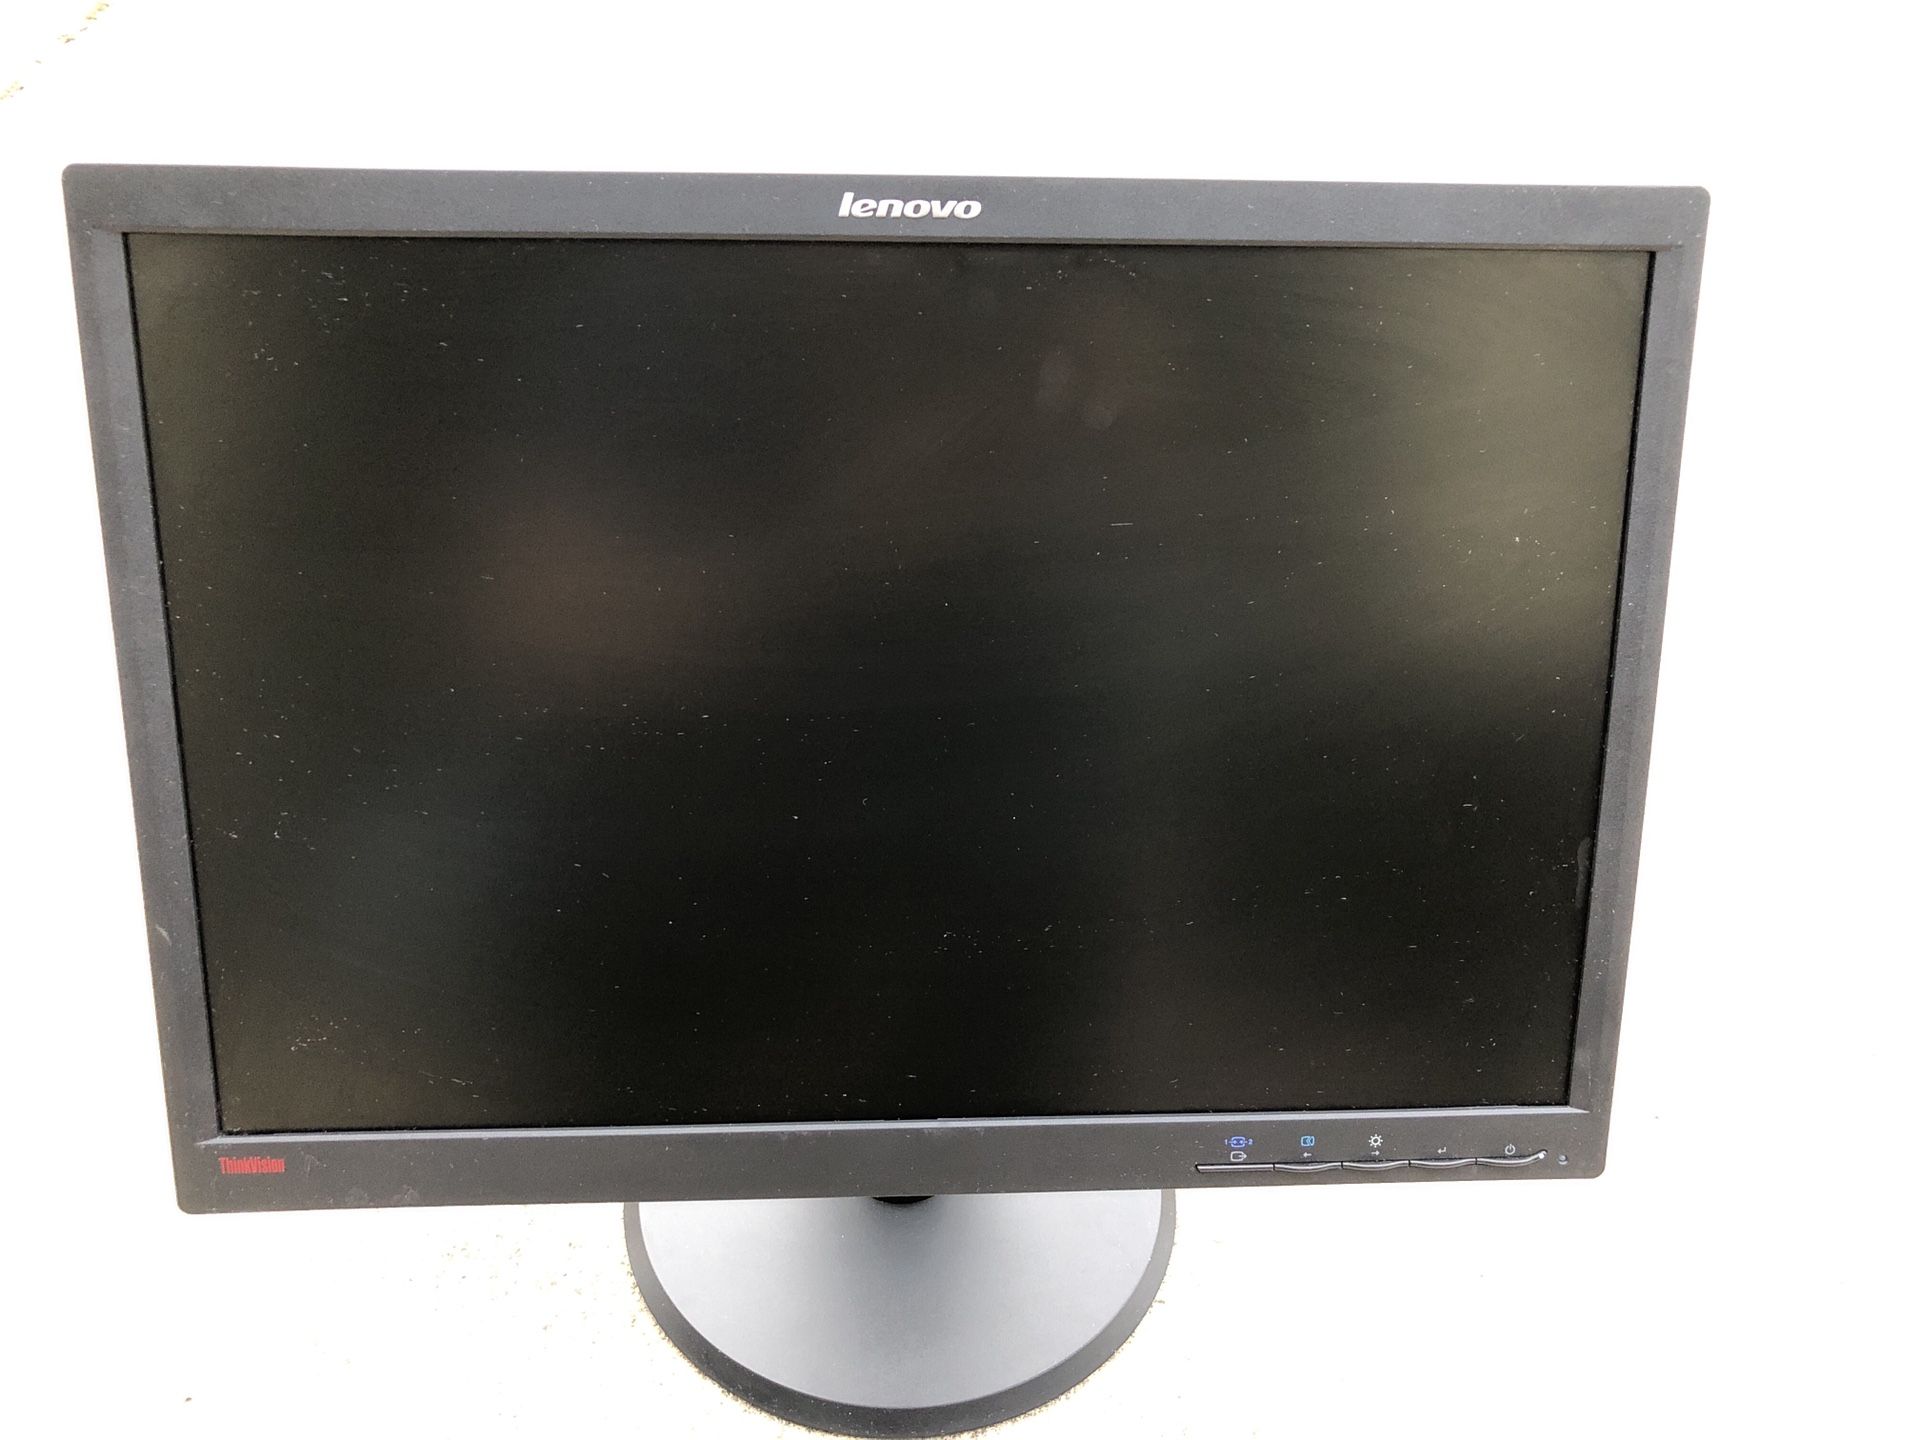 Lenovo computer monitor